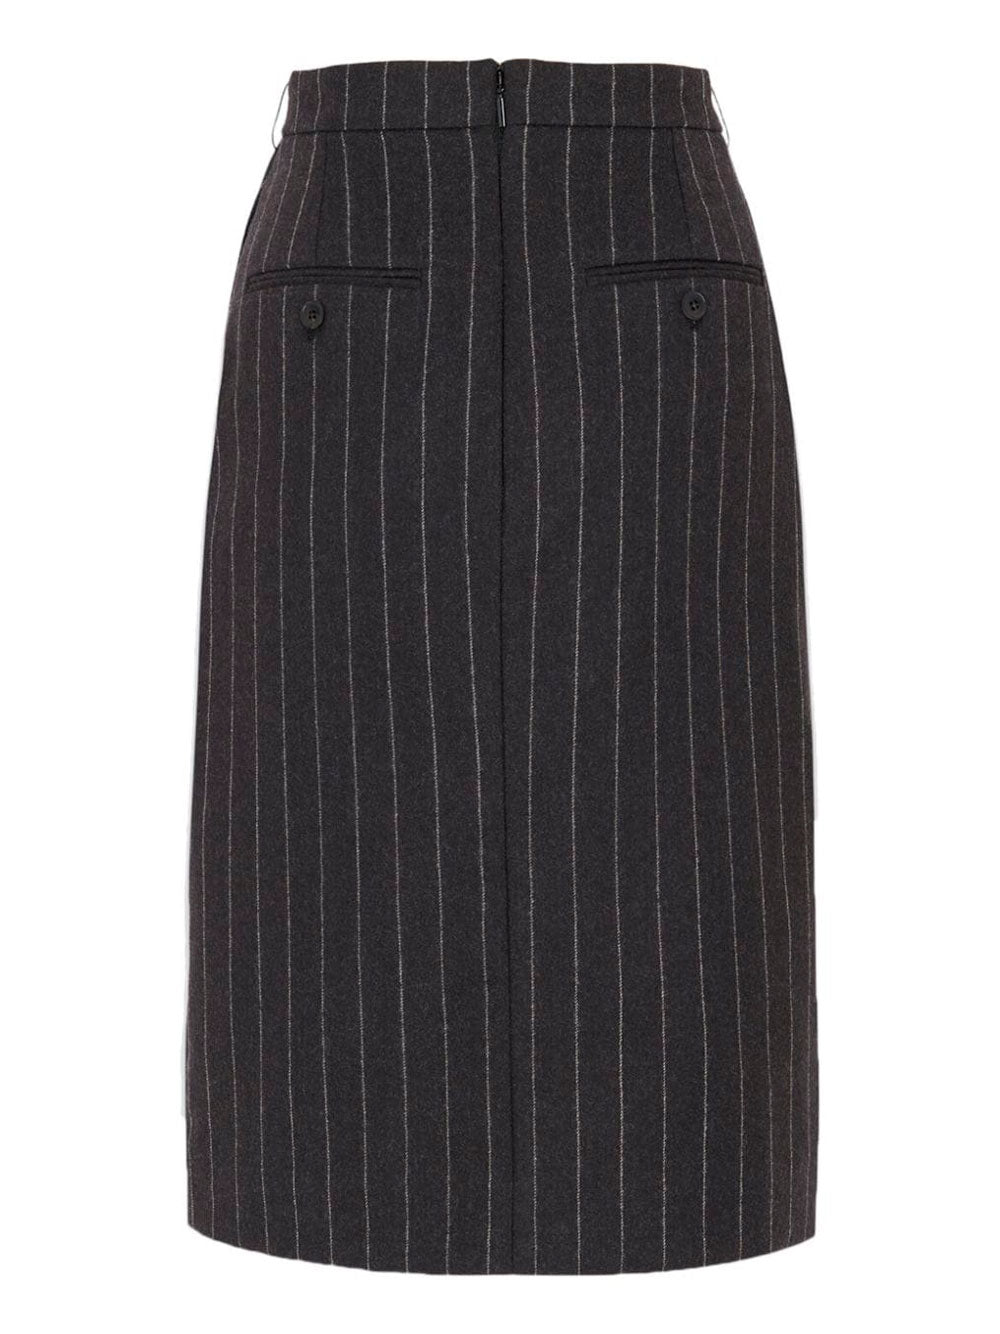 Pinstriped pencil skirt